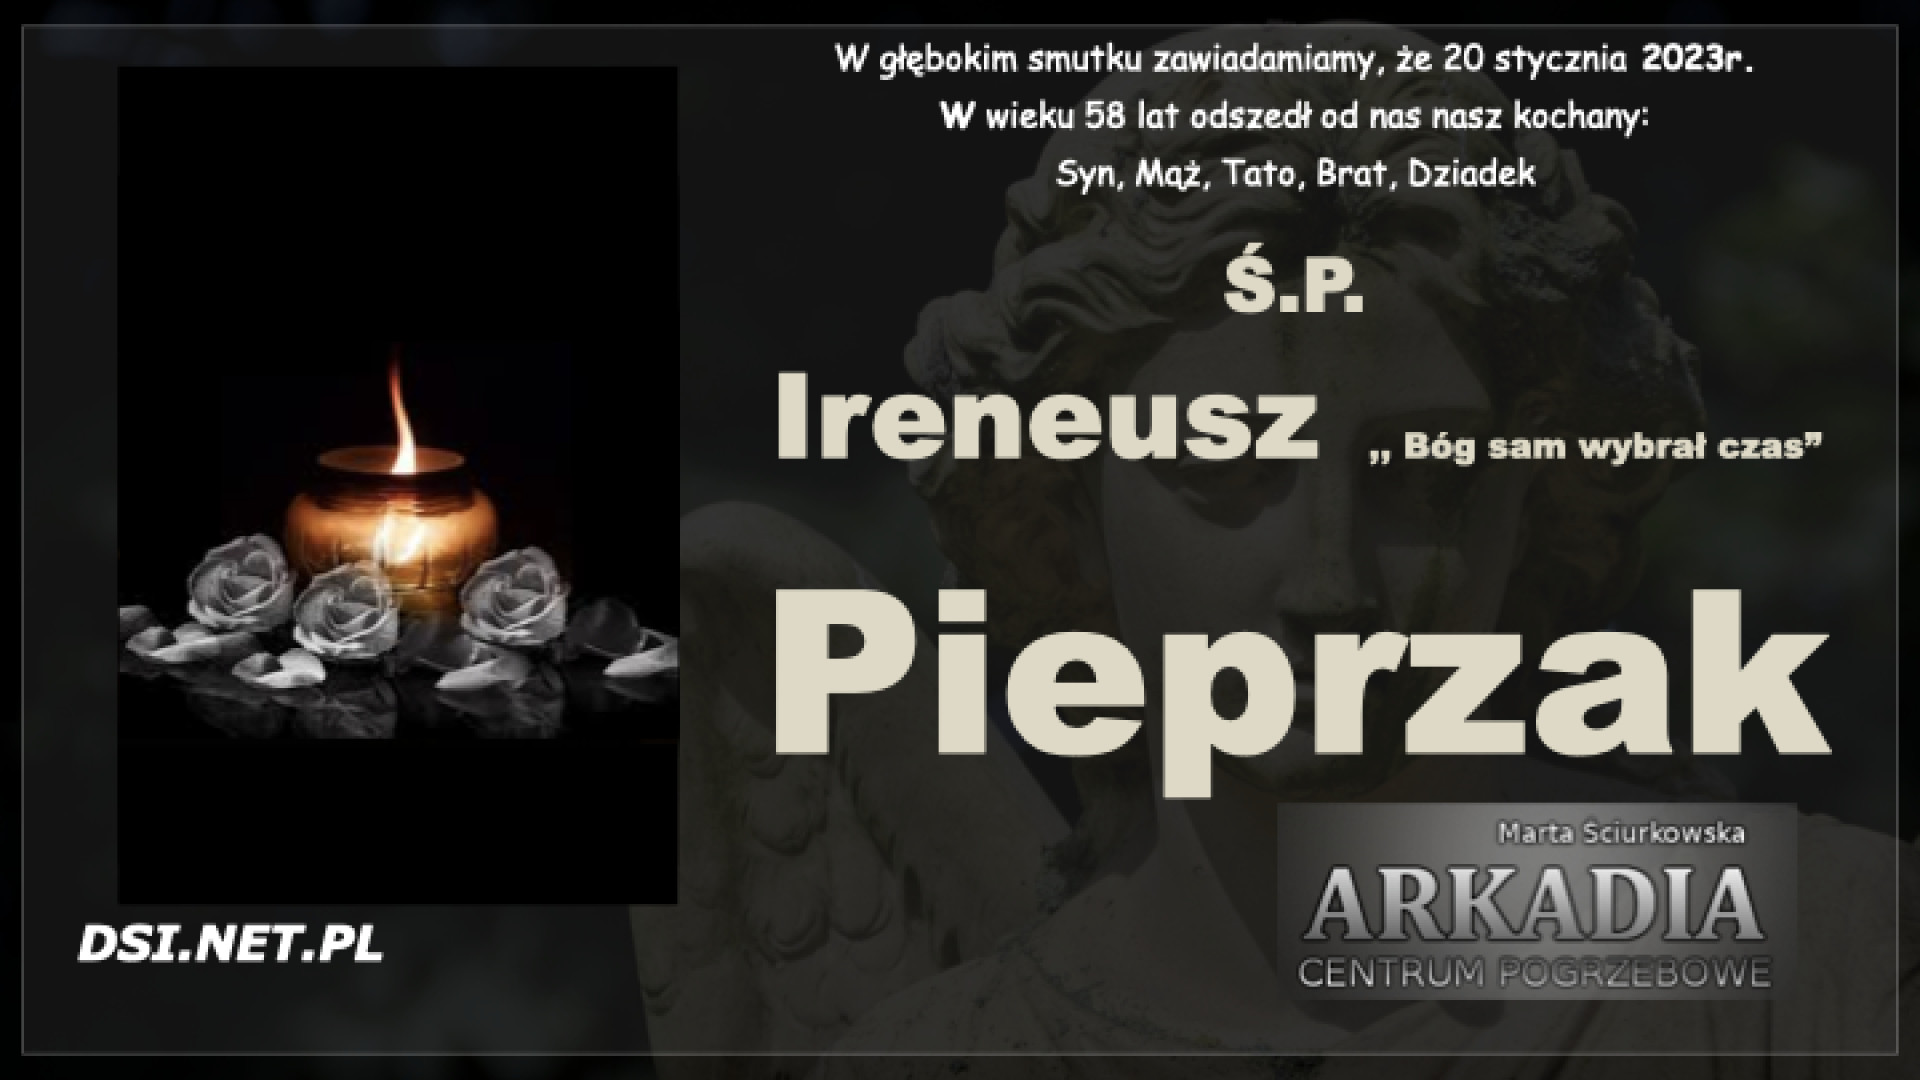 Ś.P. Ireneusz Pieprzak